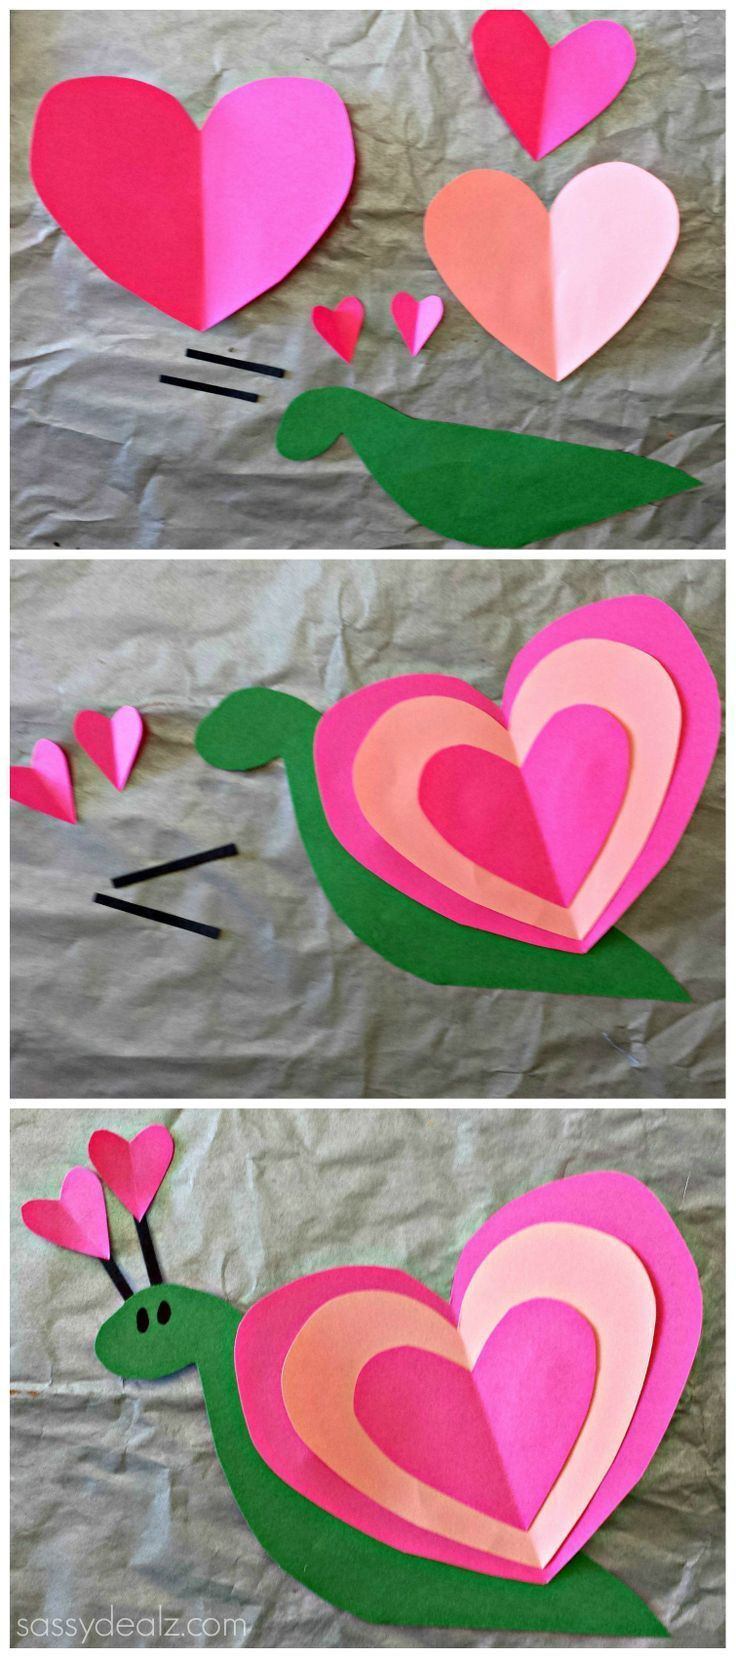 Valentine Crafts For Preschoolers Pinterest
 202 best images about Preschool Valentine s Day Crafts on